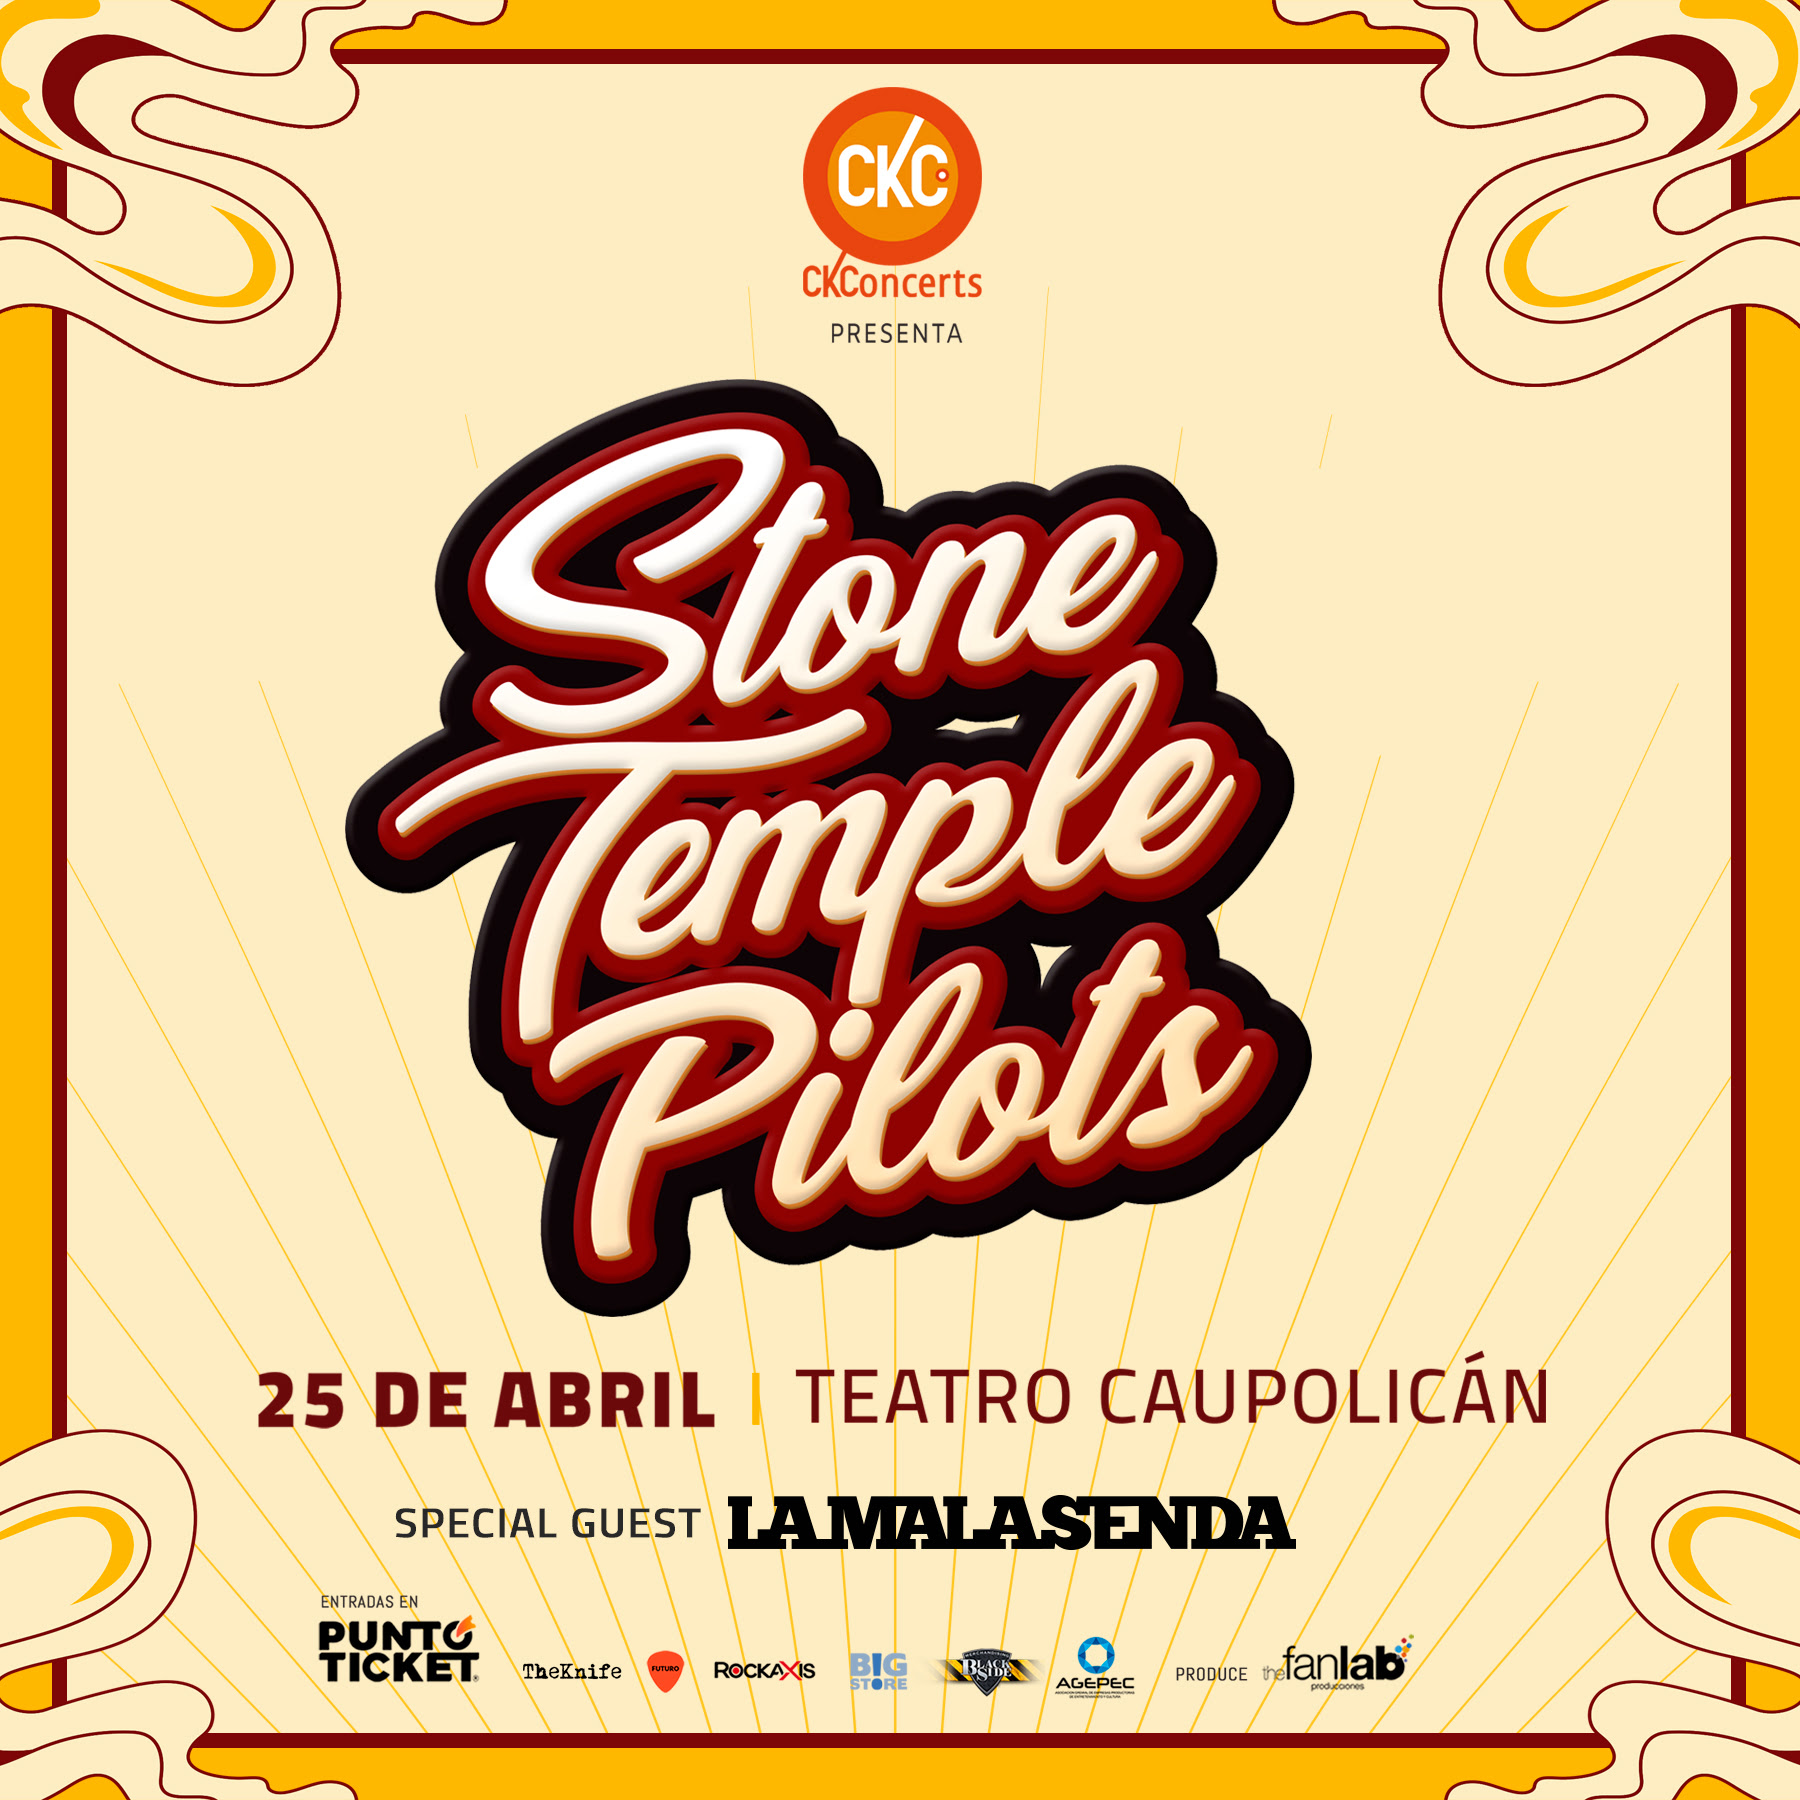 La Mala Senda abrirá el retorno de Stone Temple Pilots